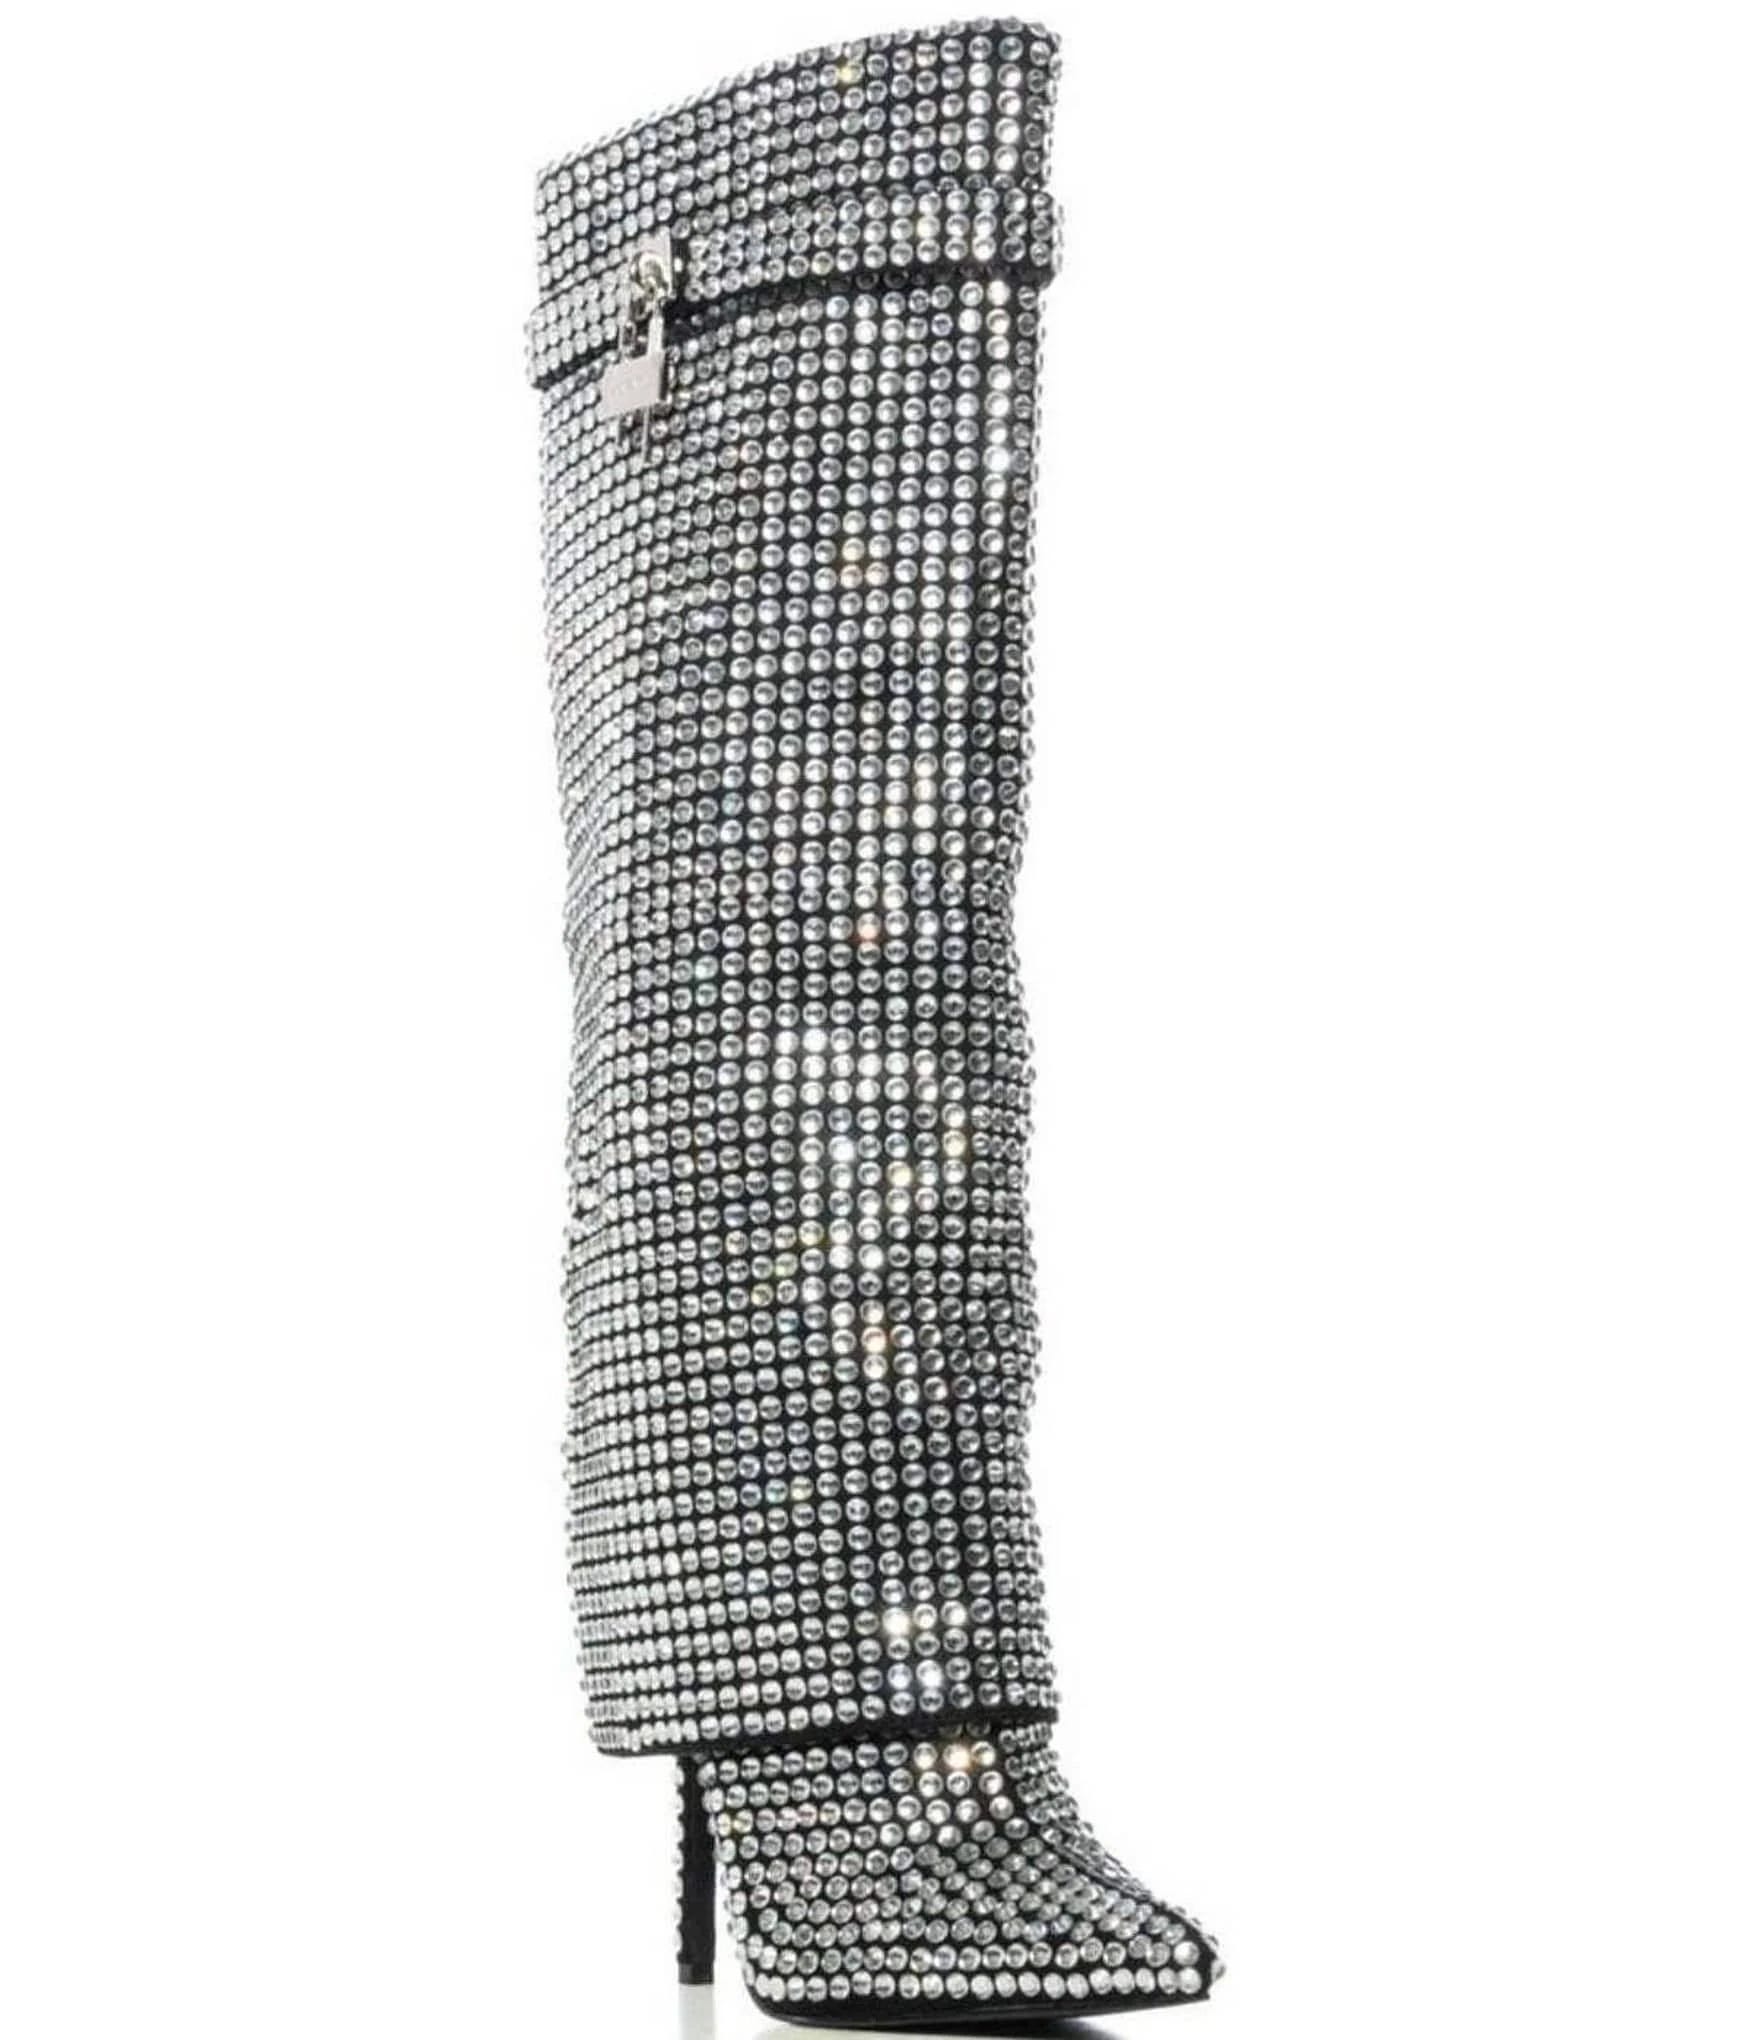 Stylish Crystal Rhinestone Foldover Tall Stiletto Boot | Image